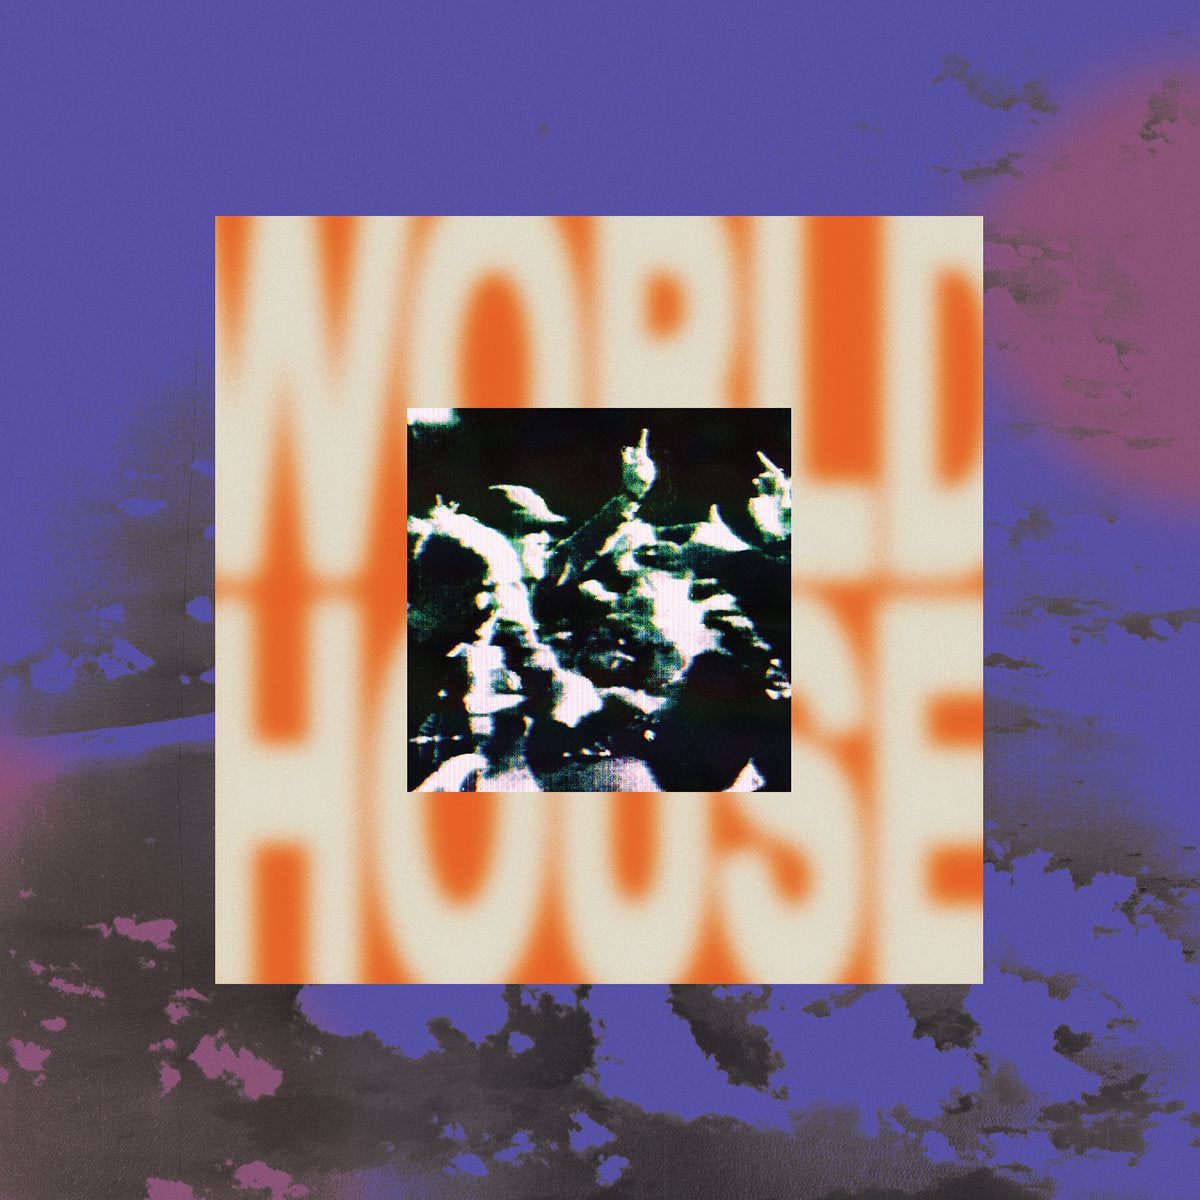 MIL-SPEC 'World House' LP